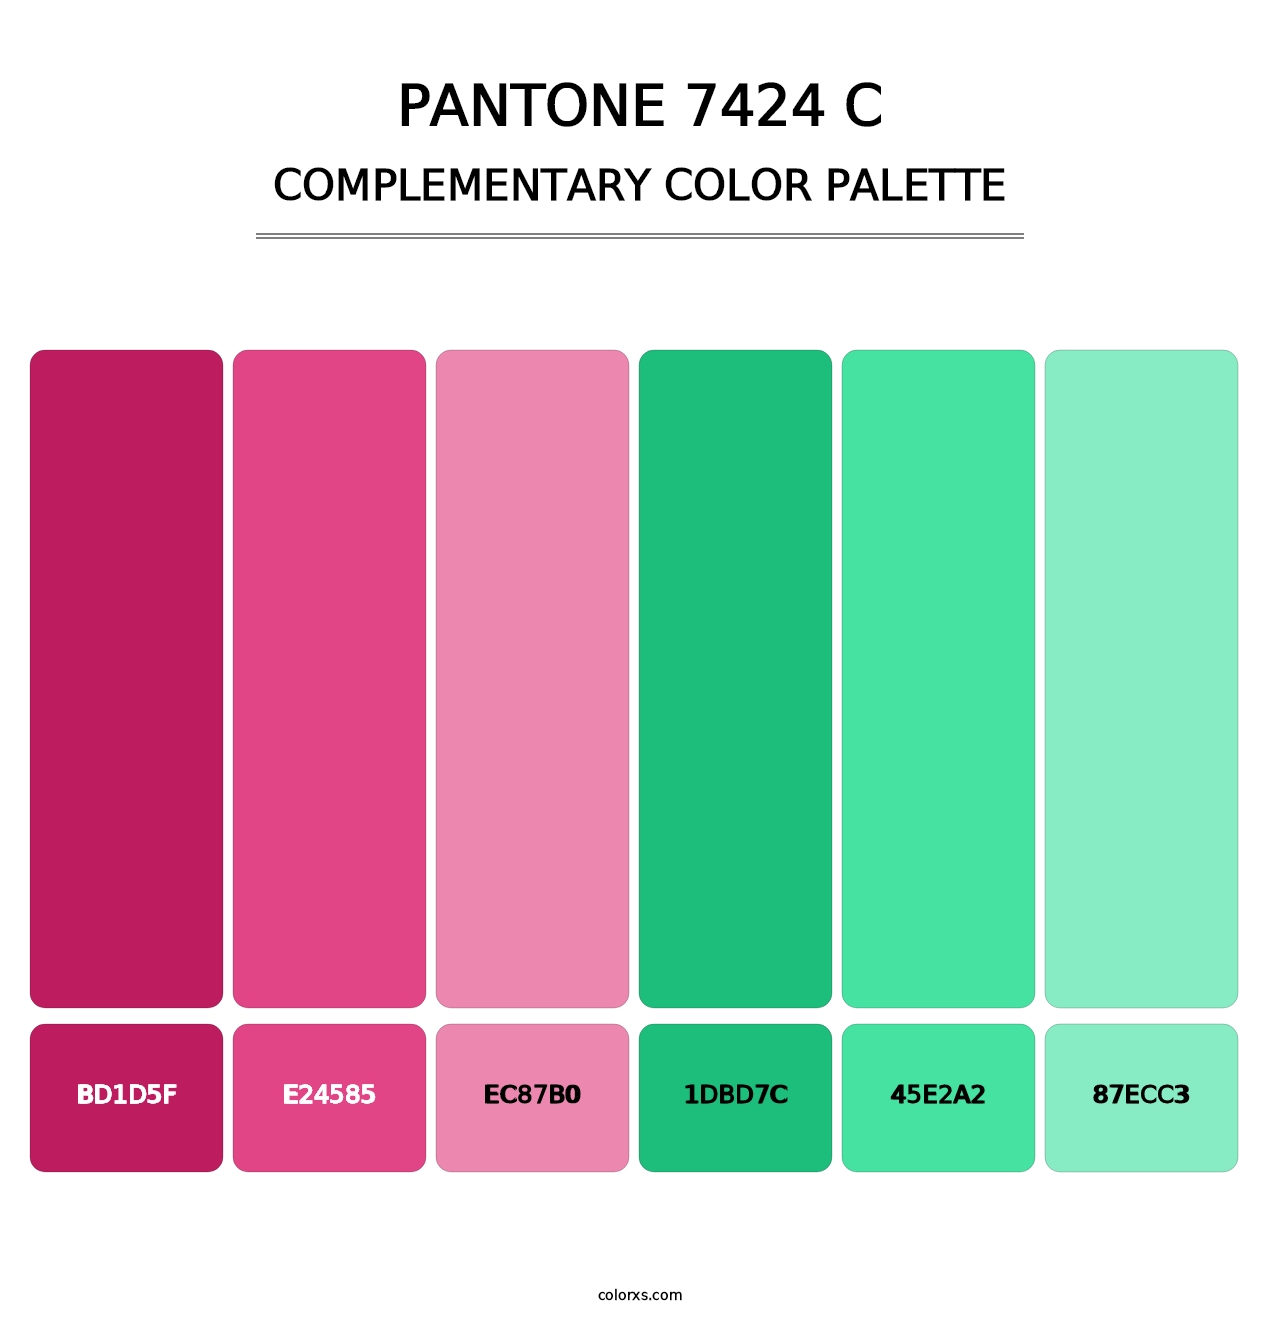 PANTONE 7424 C - Complementary Color Palette